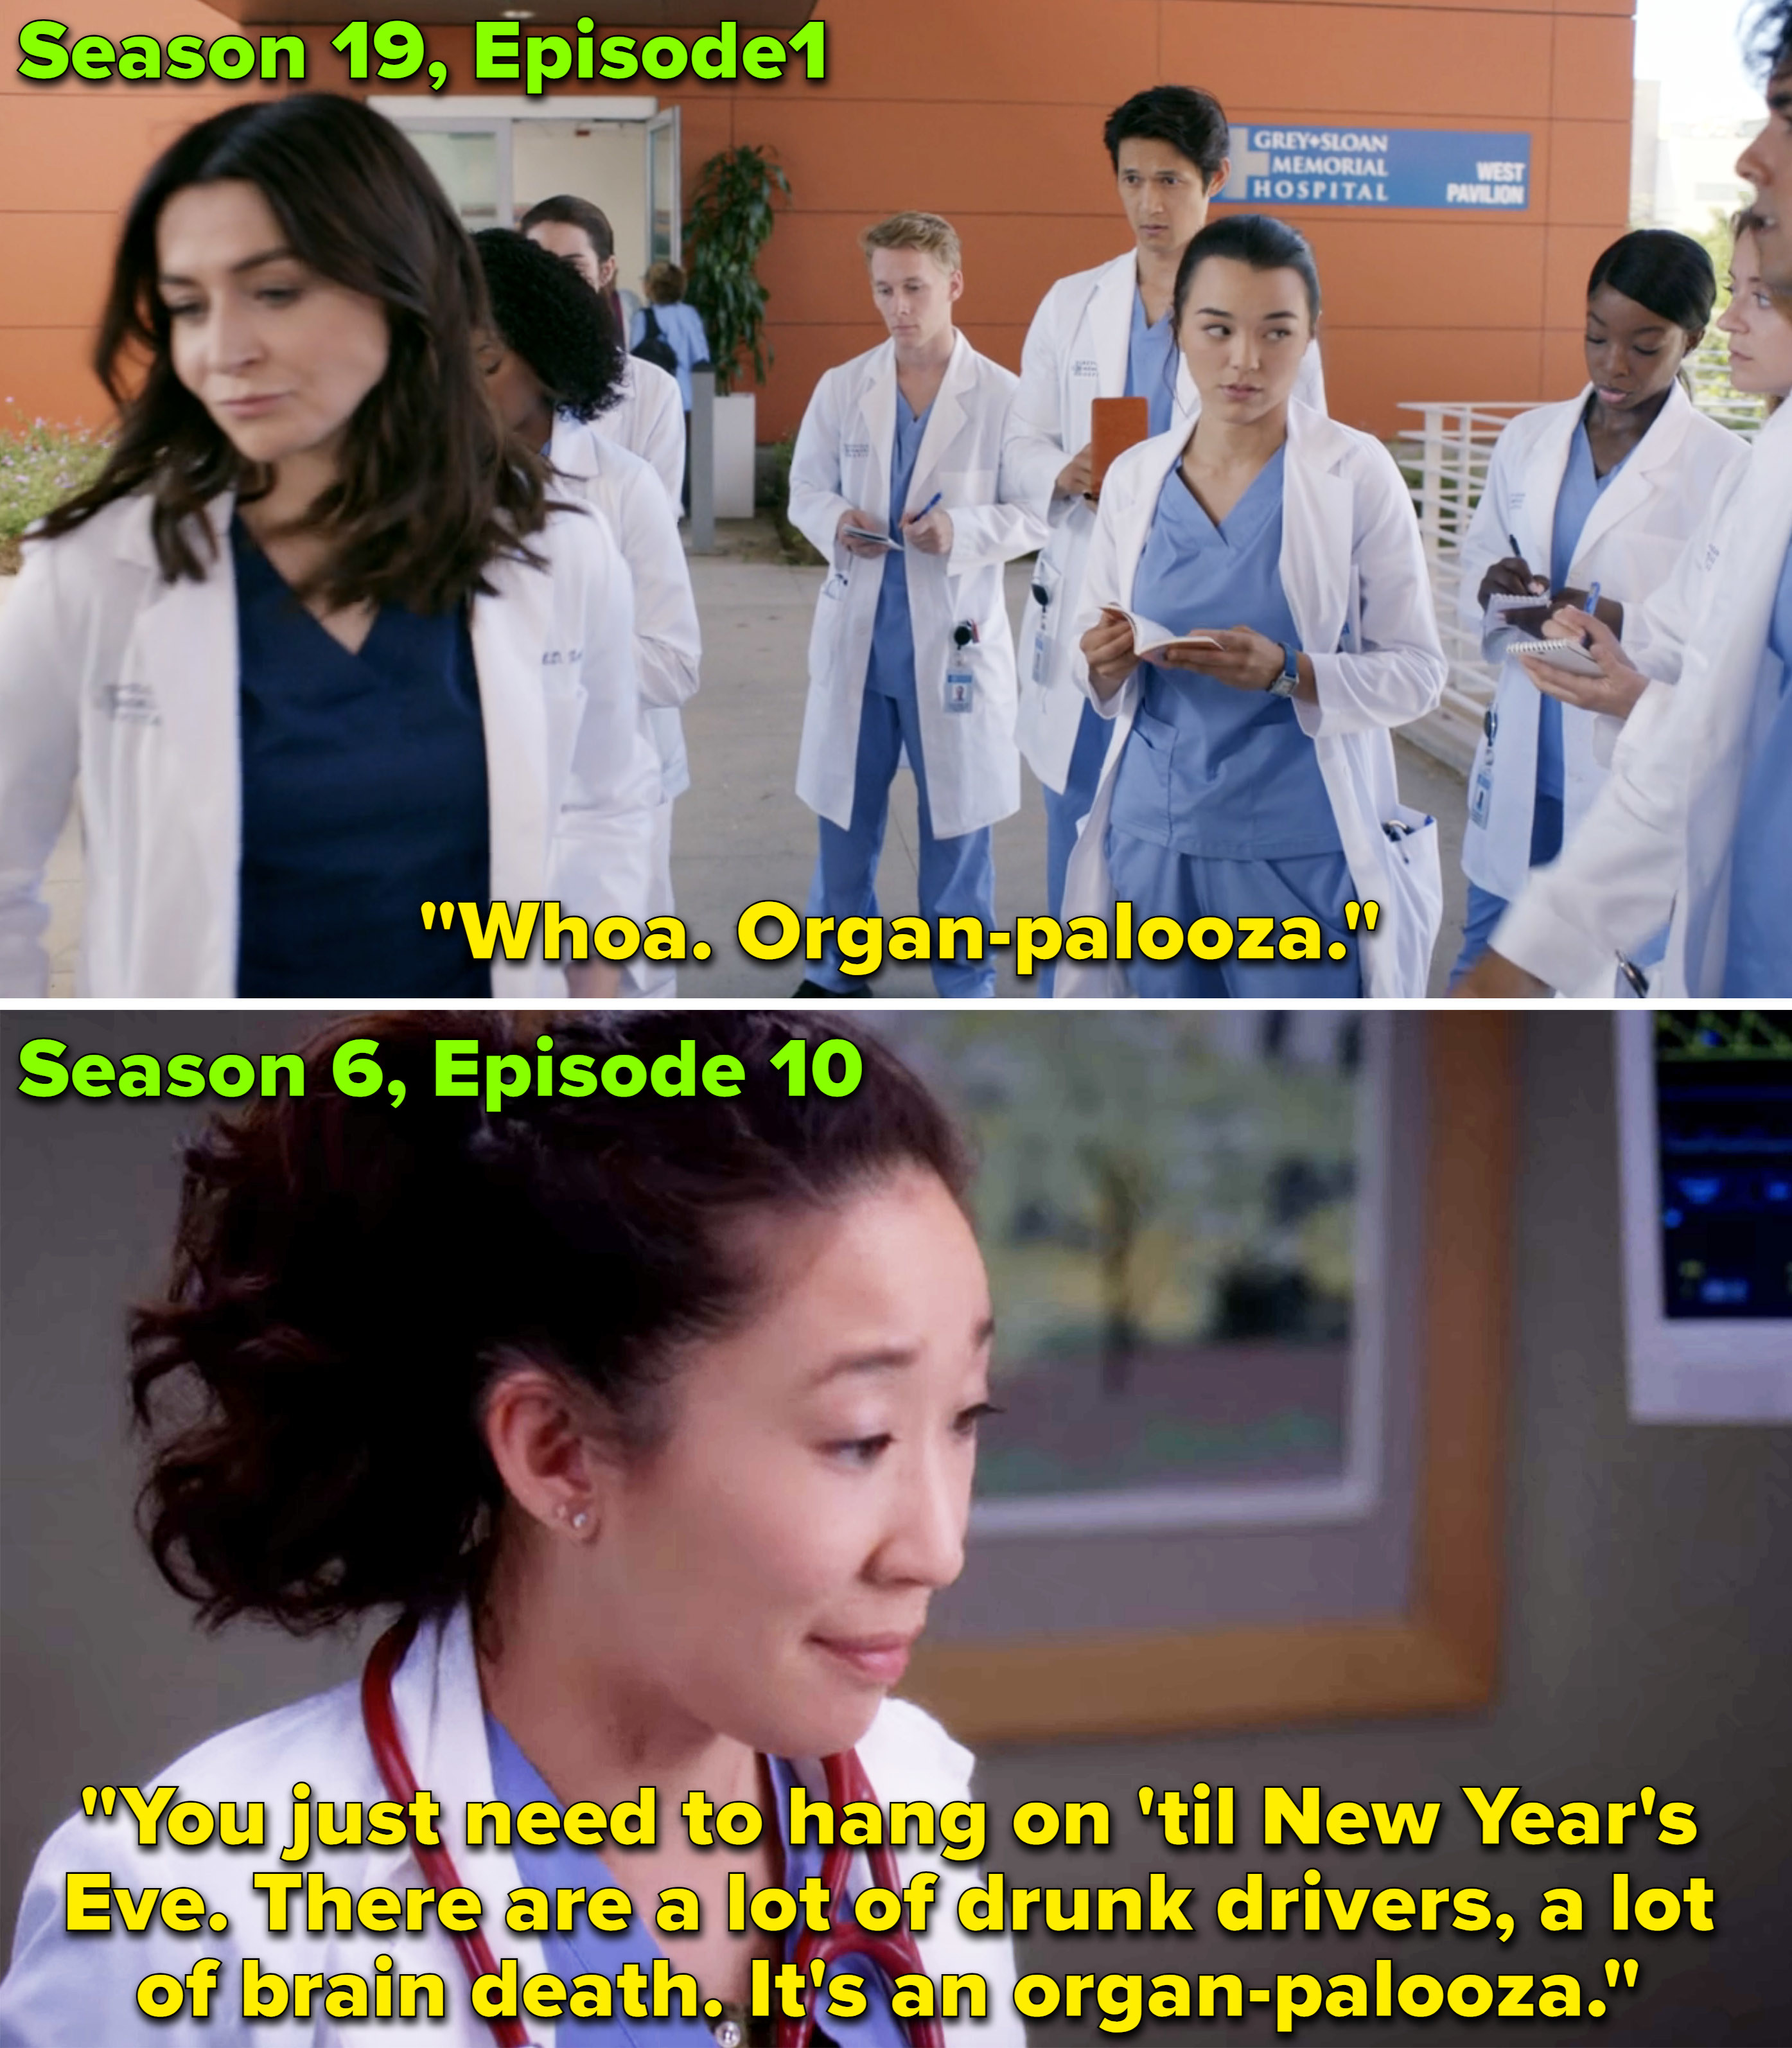 Mika saying organ-palooza vs. Cristina saying it in Season 6